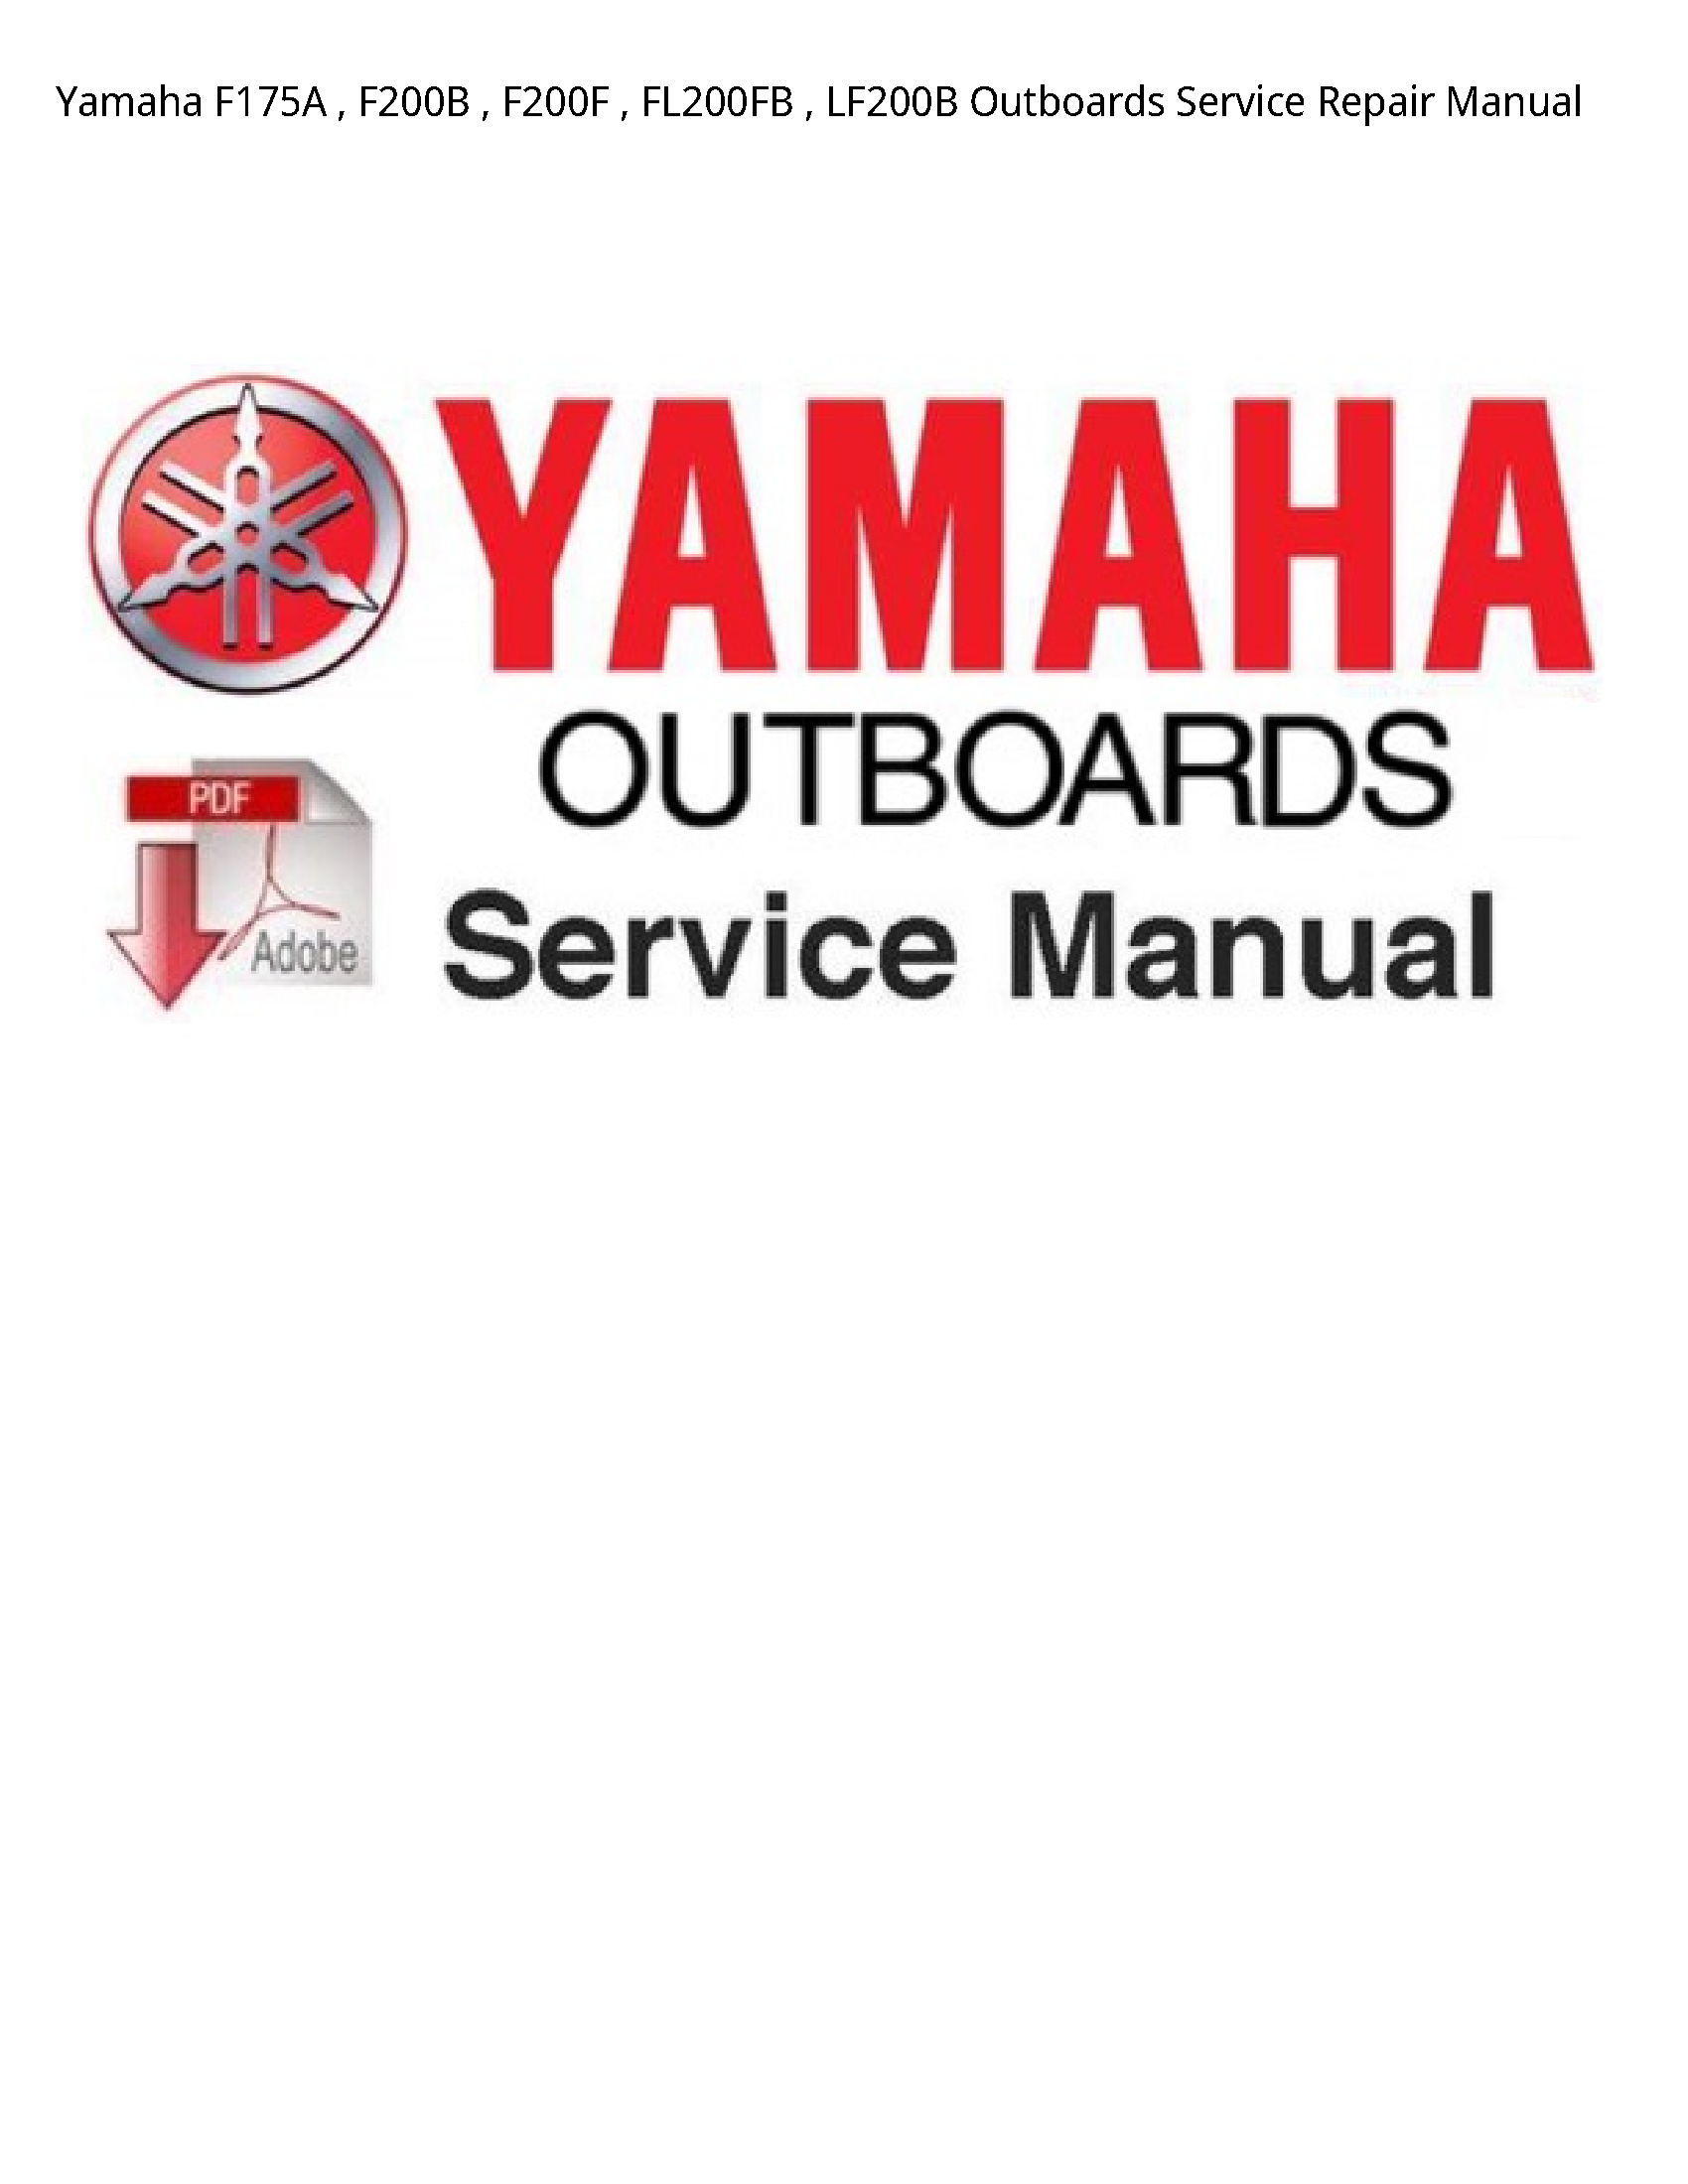 Yamaha F175A Outboards manual